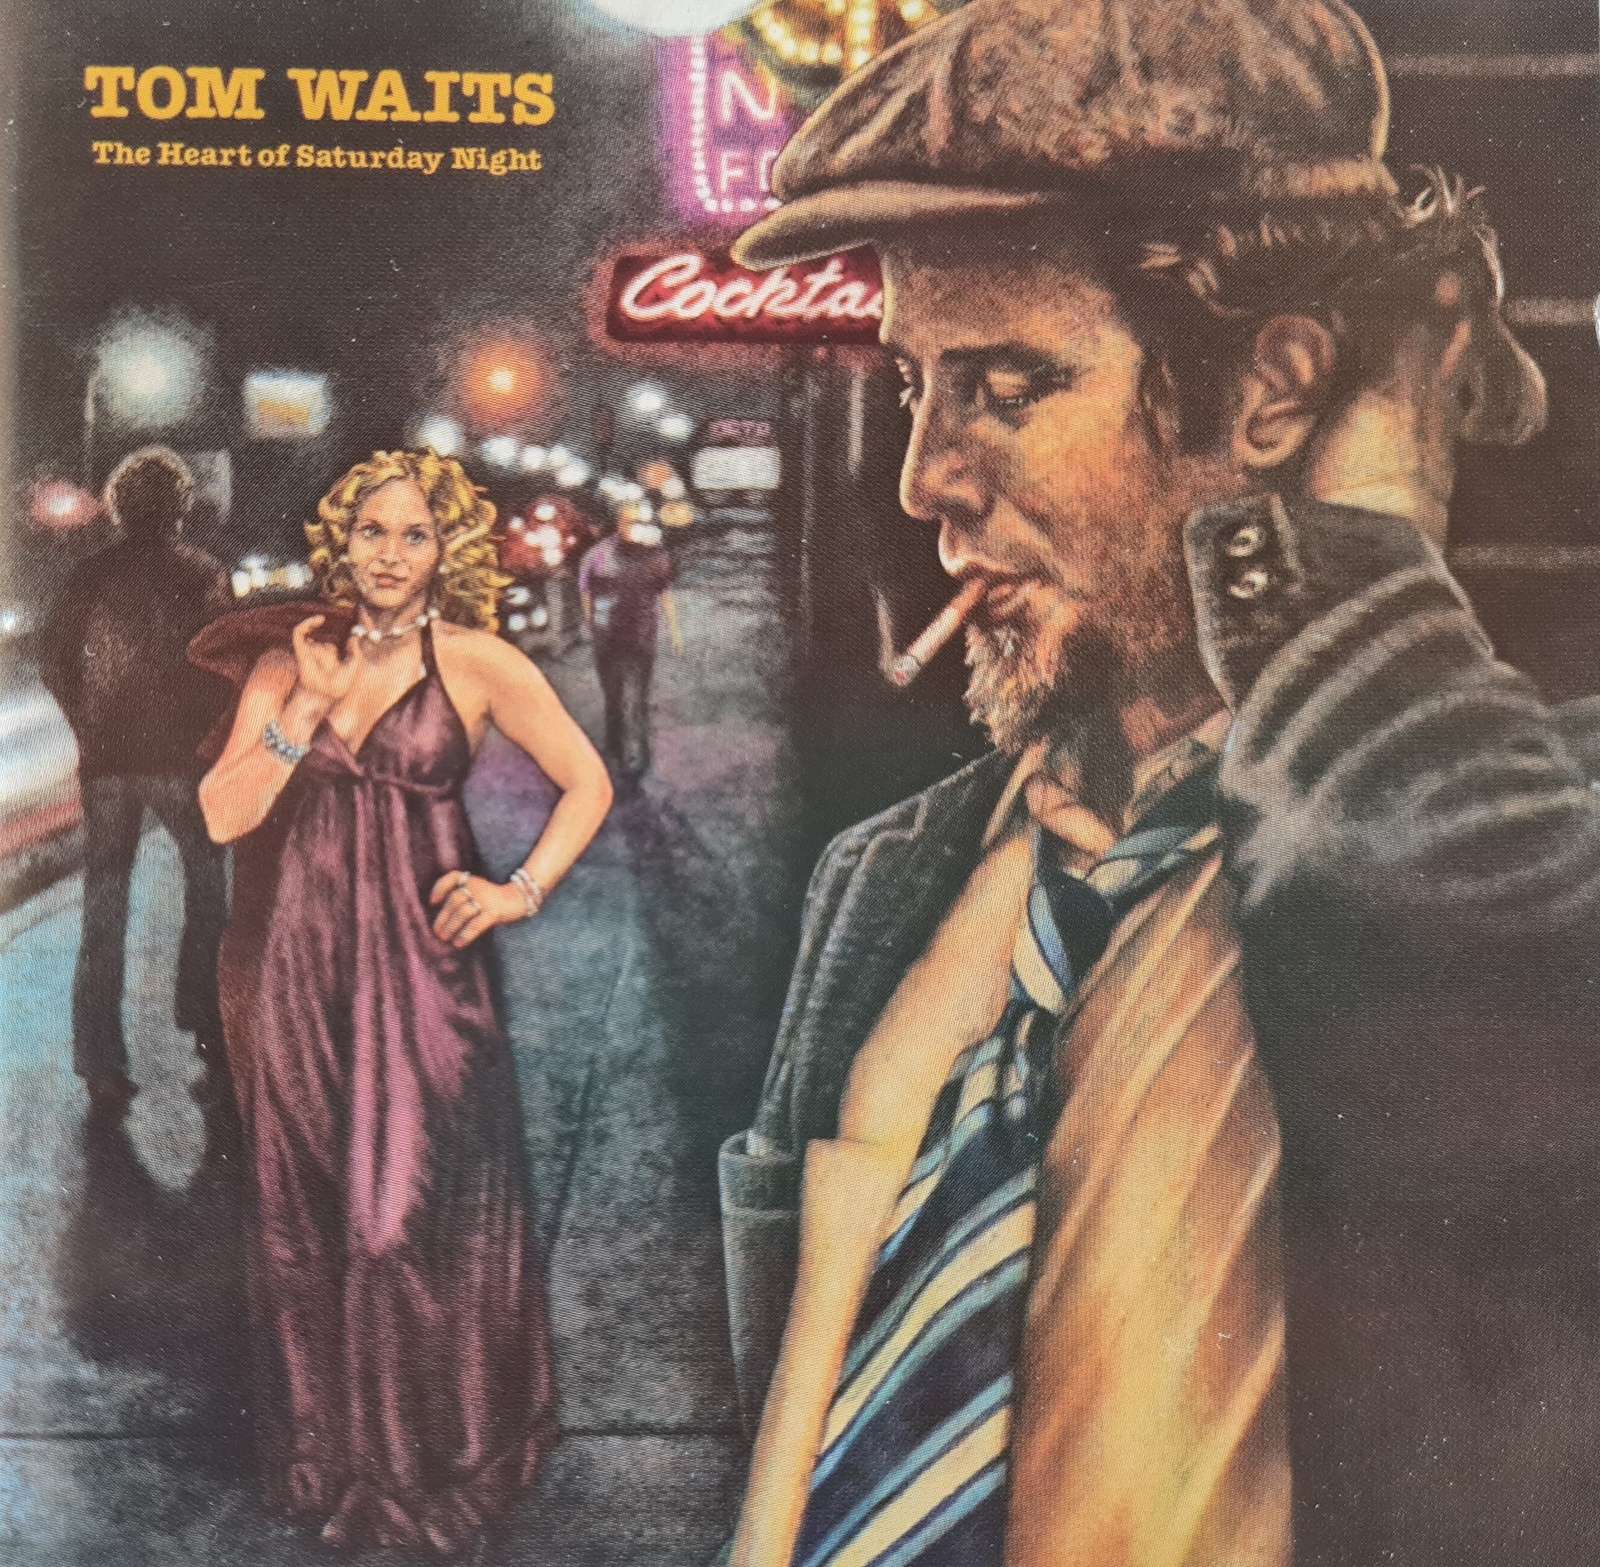 Tom Waits - The Heart of Saturday Night (CD)